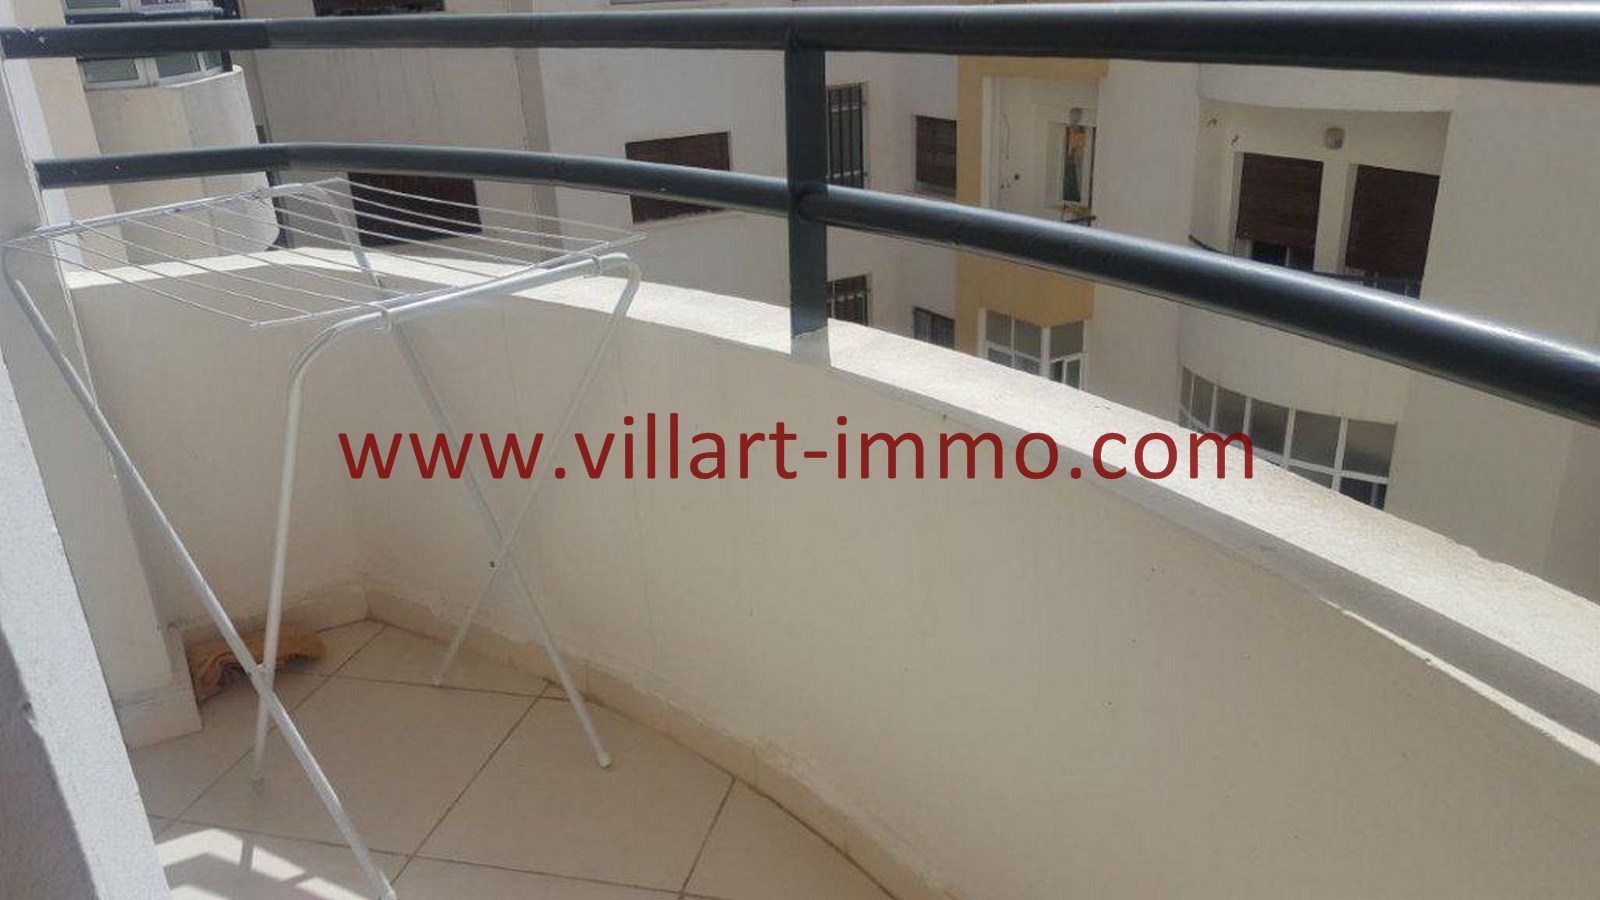 6-Vente-Appartement-Tanger-Balcon-VA514-Route de Rabat-Villart Immo